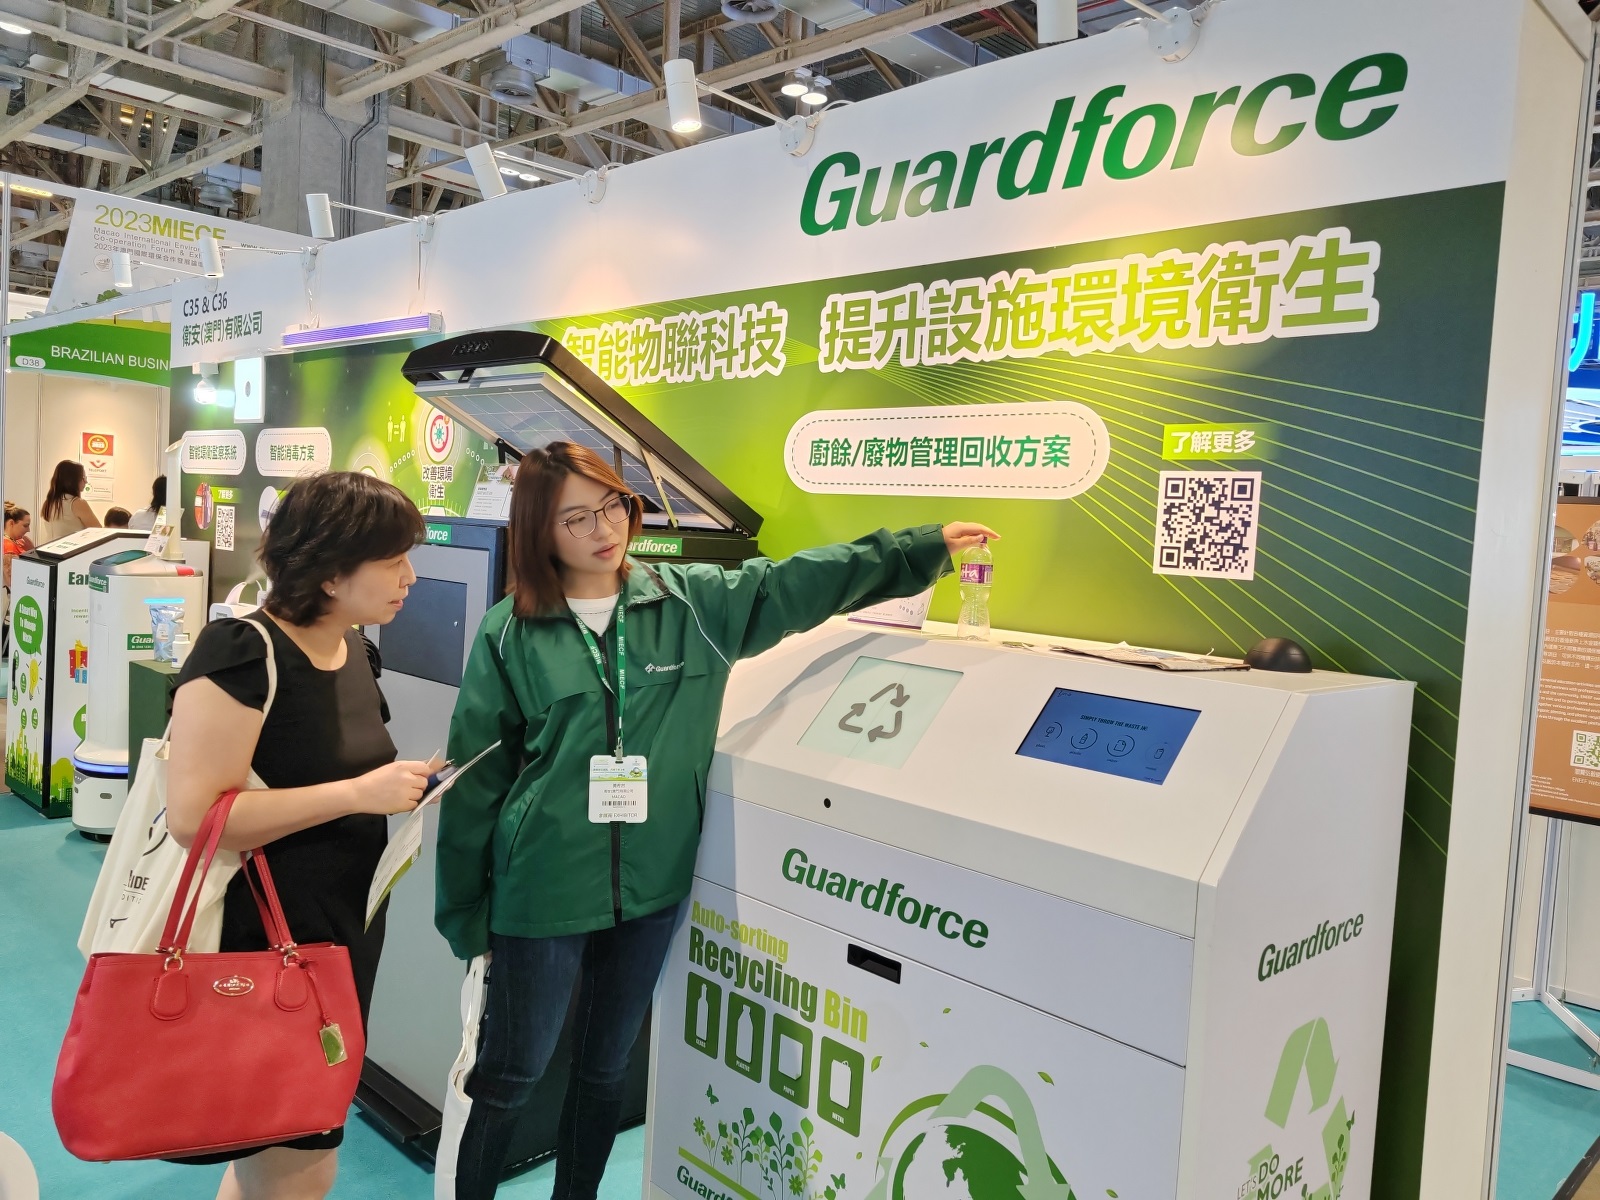 MIECF 2023 - Auto-sorting bin  | Guardforce Macau 